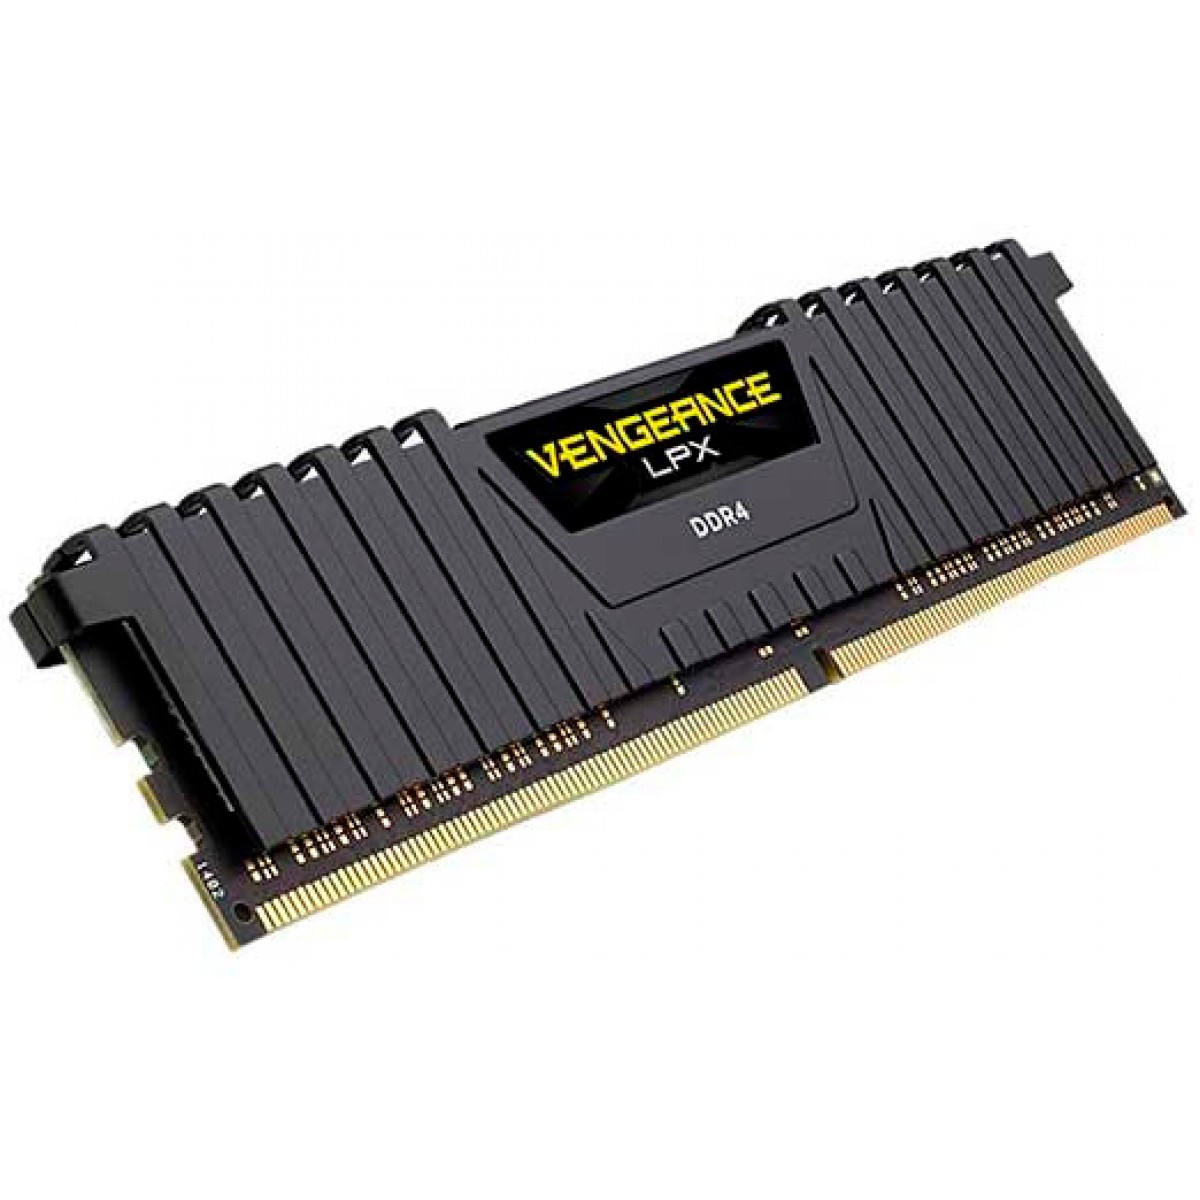 Memória DDR4 Corsair Vengeance LPX, 32GB (2x16GB) 2400MHz, CMK32GX4M2A2400C16